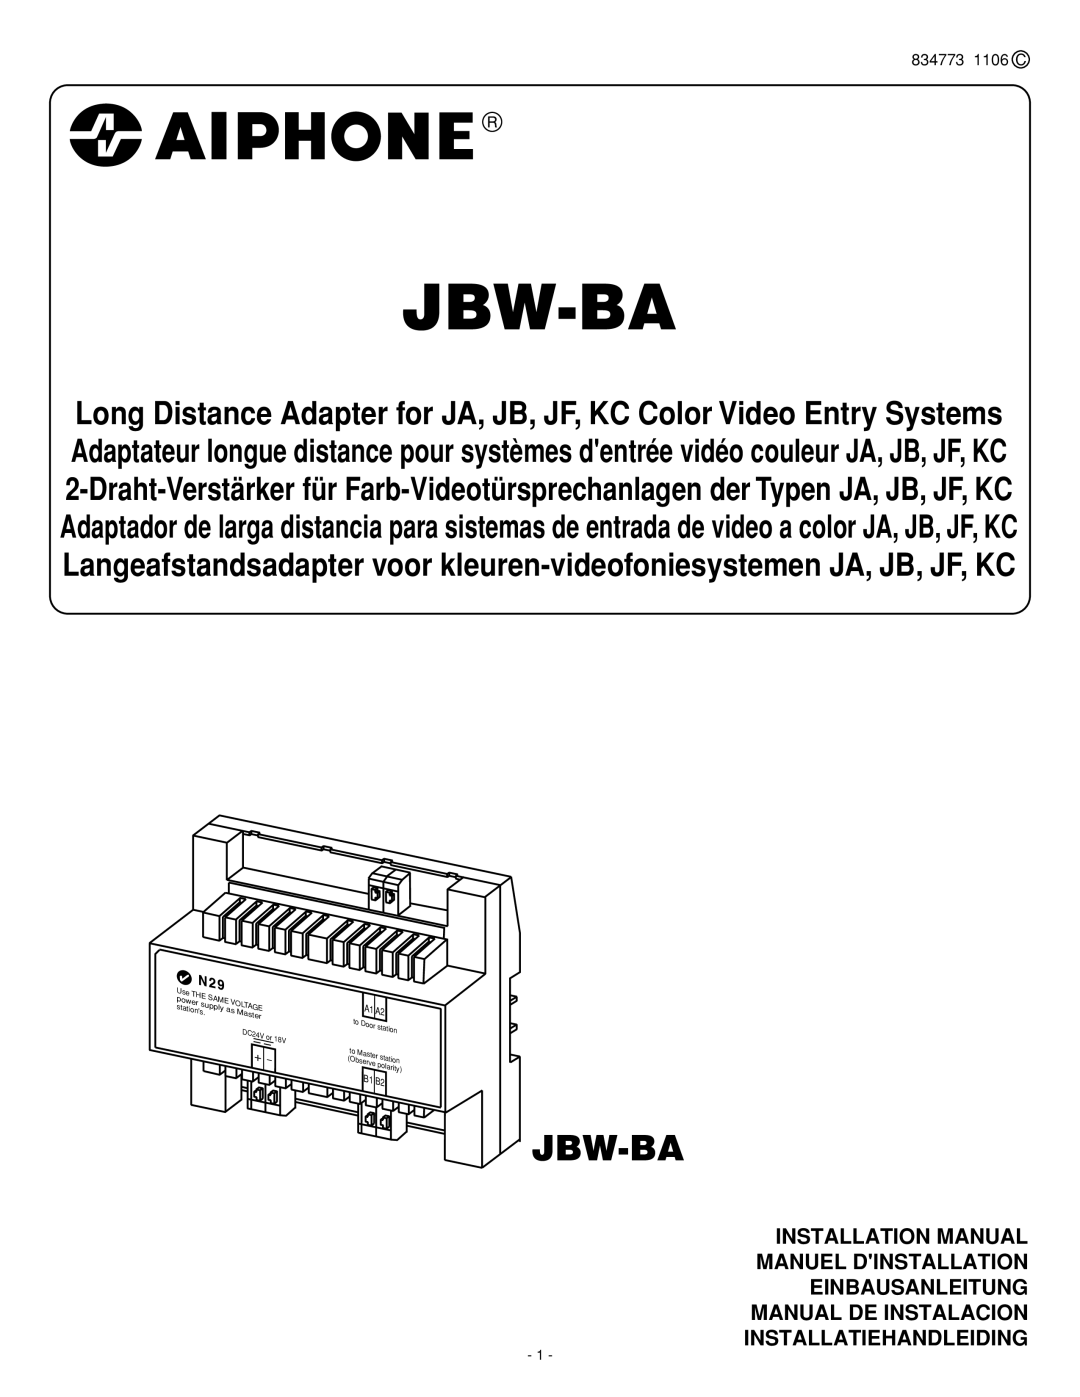 Aiphone JBW-BA manual 